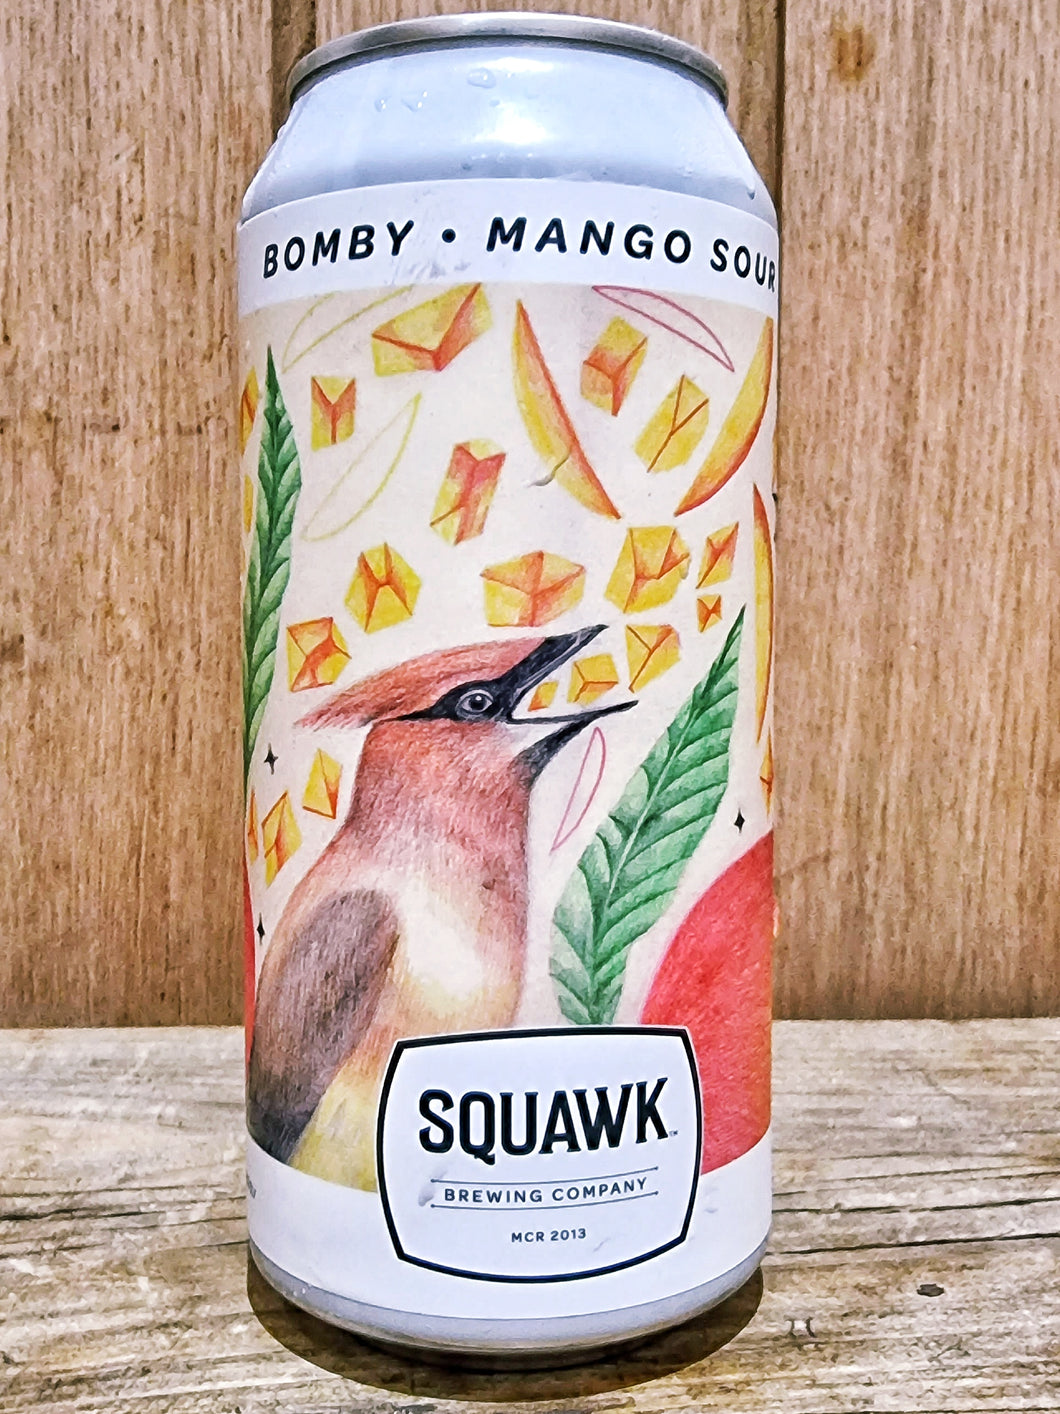 Squawk - Bomby